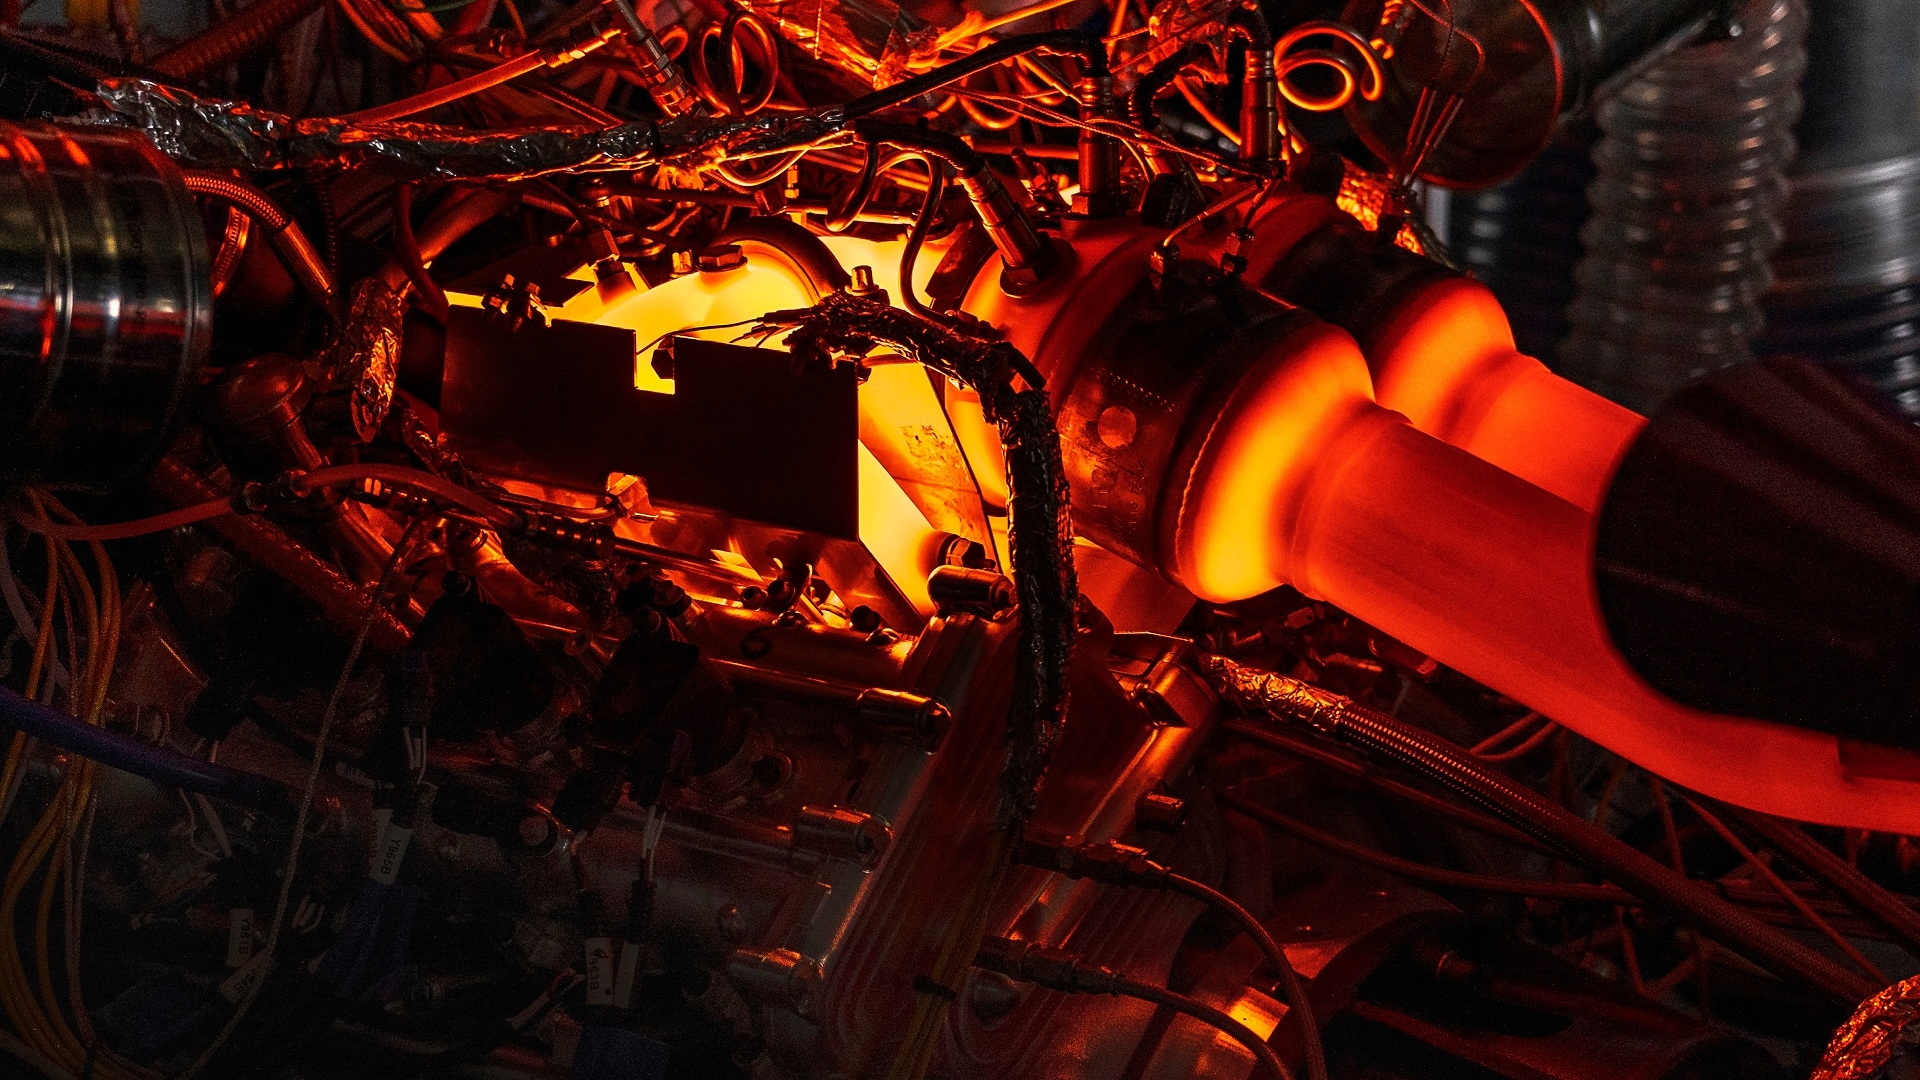 Aston Martin turbocharged 3.0-liter V-6